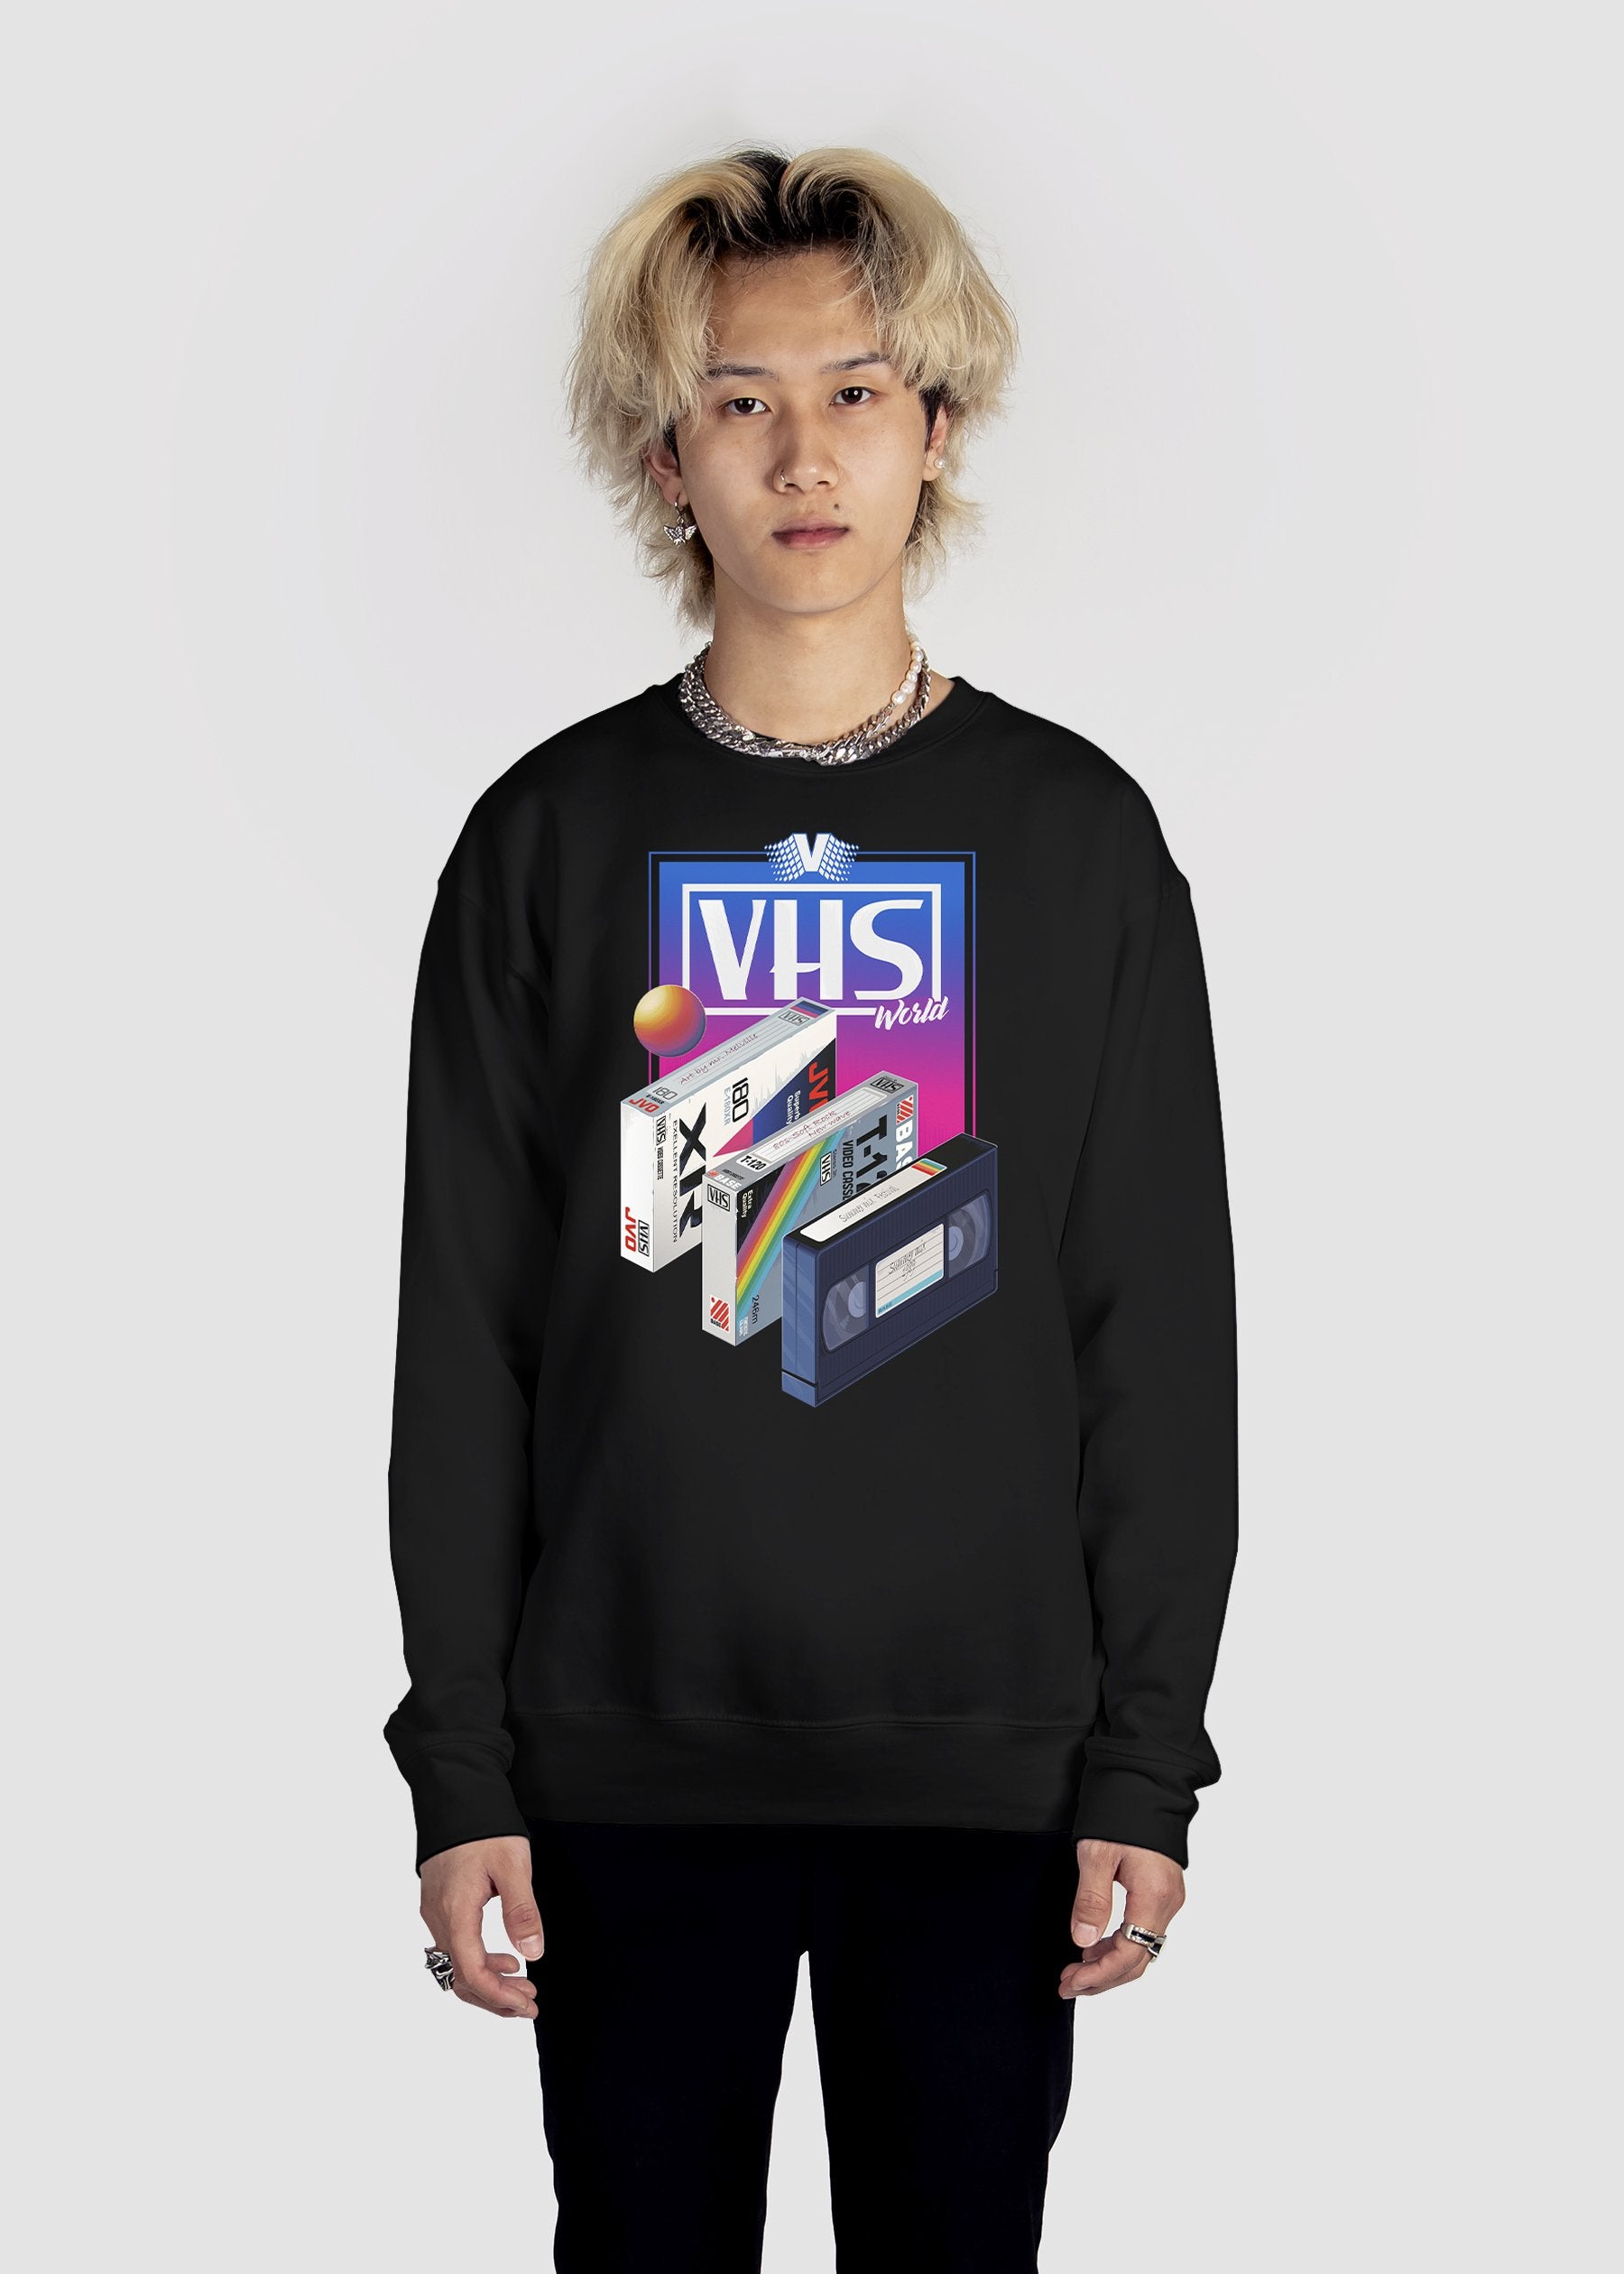 VHS World Sweatshirt Graphic Sweatshirt Vapor95 Black S